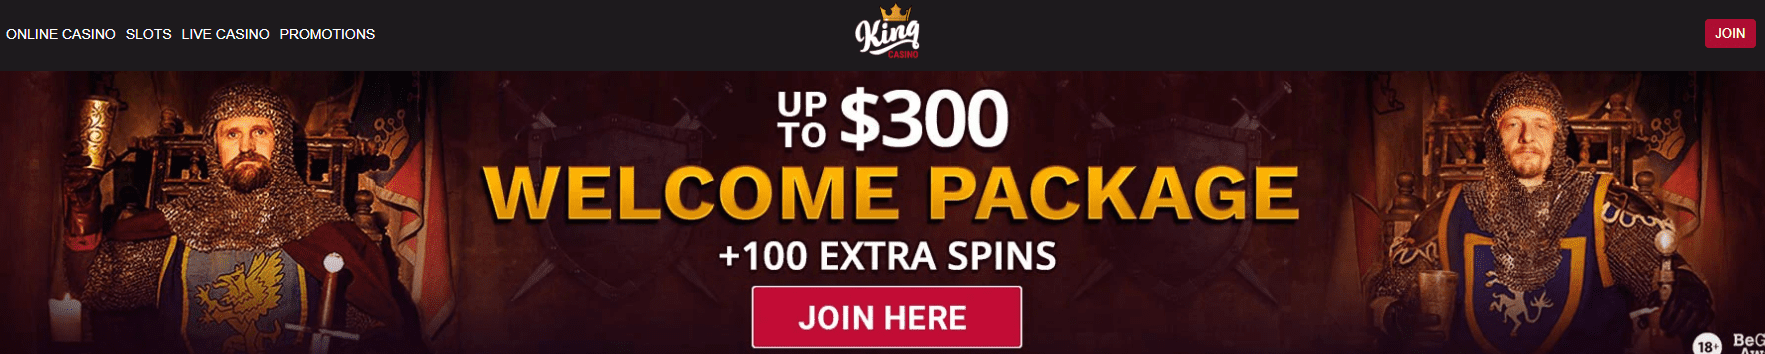 KING Casino Slots banner